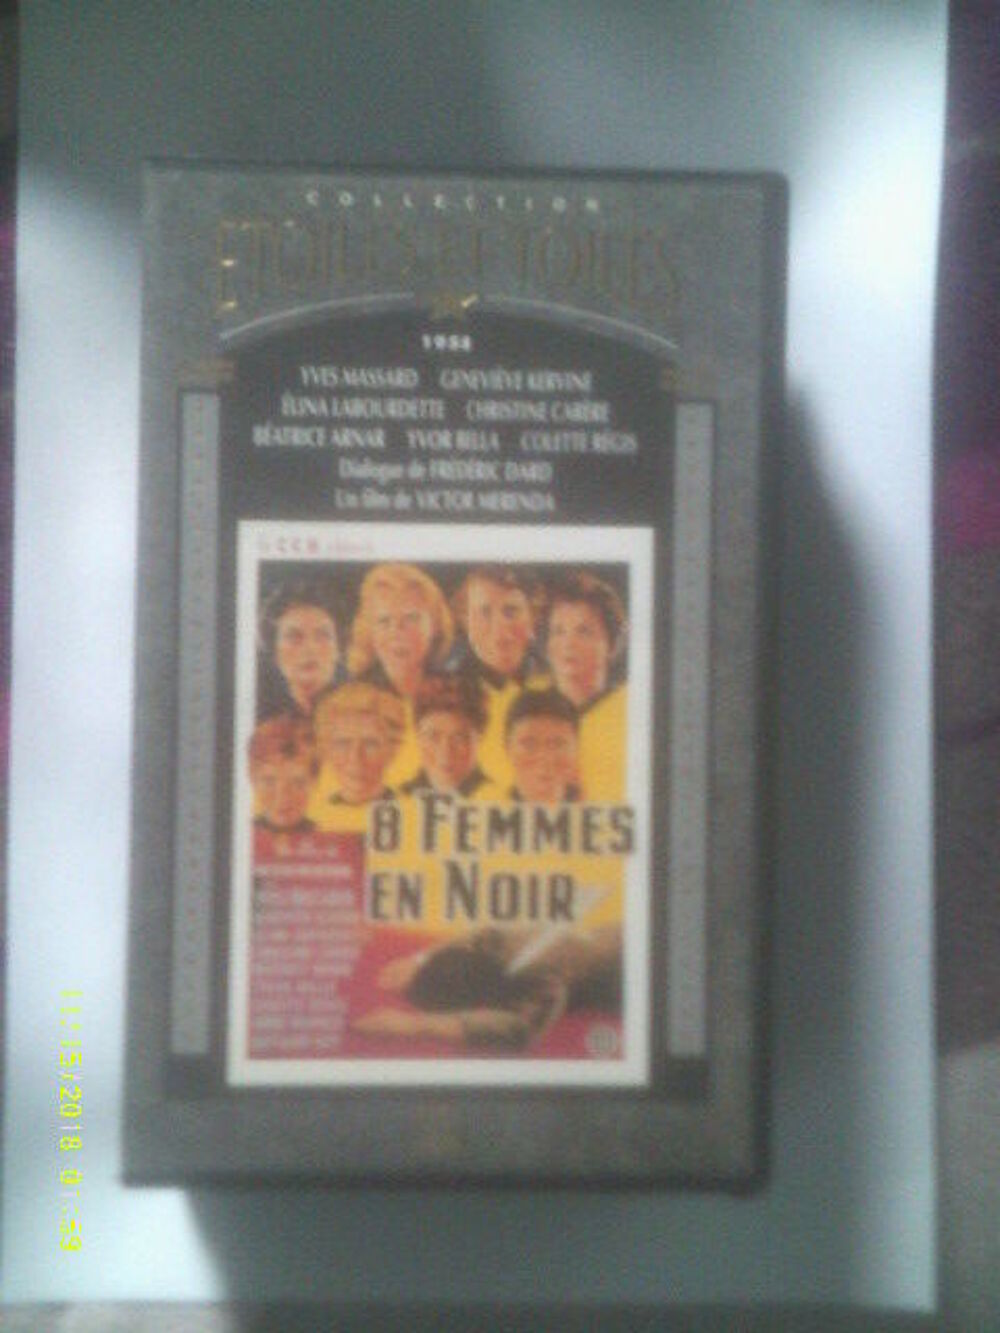 HUIT FEMMES EN NOIR avec genevieve Kervine DVD et blu-ray